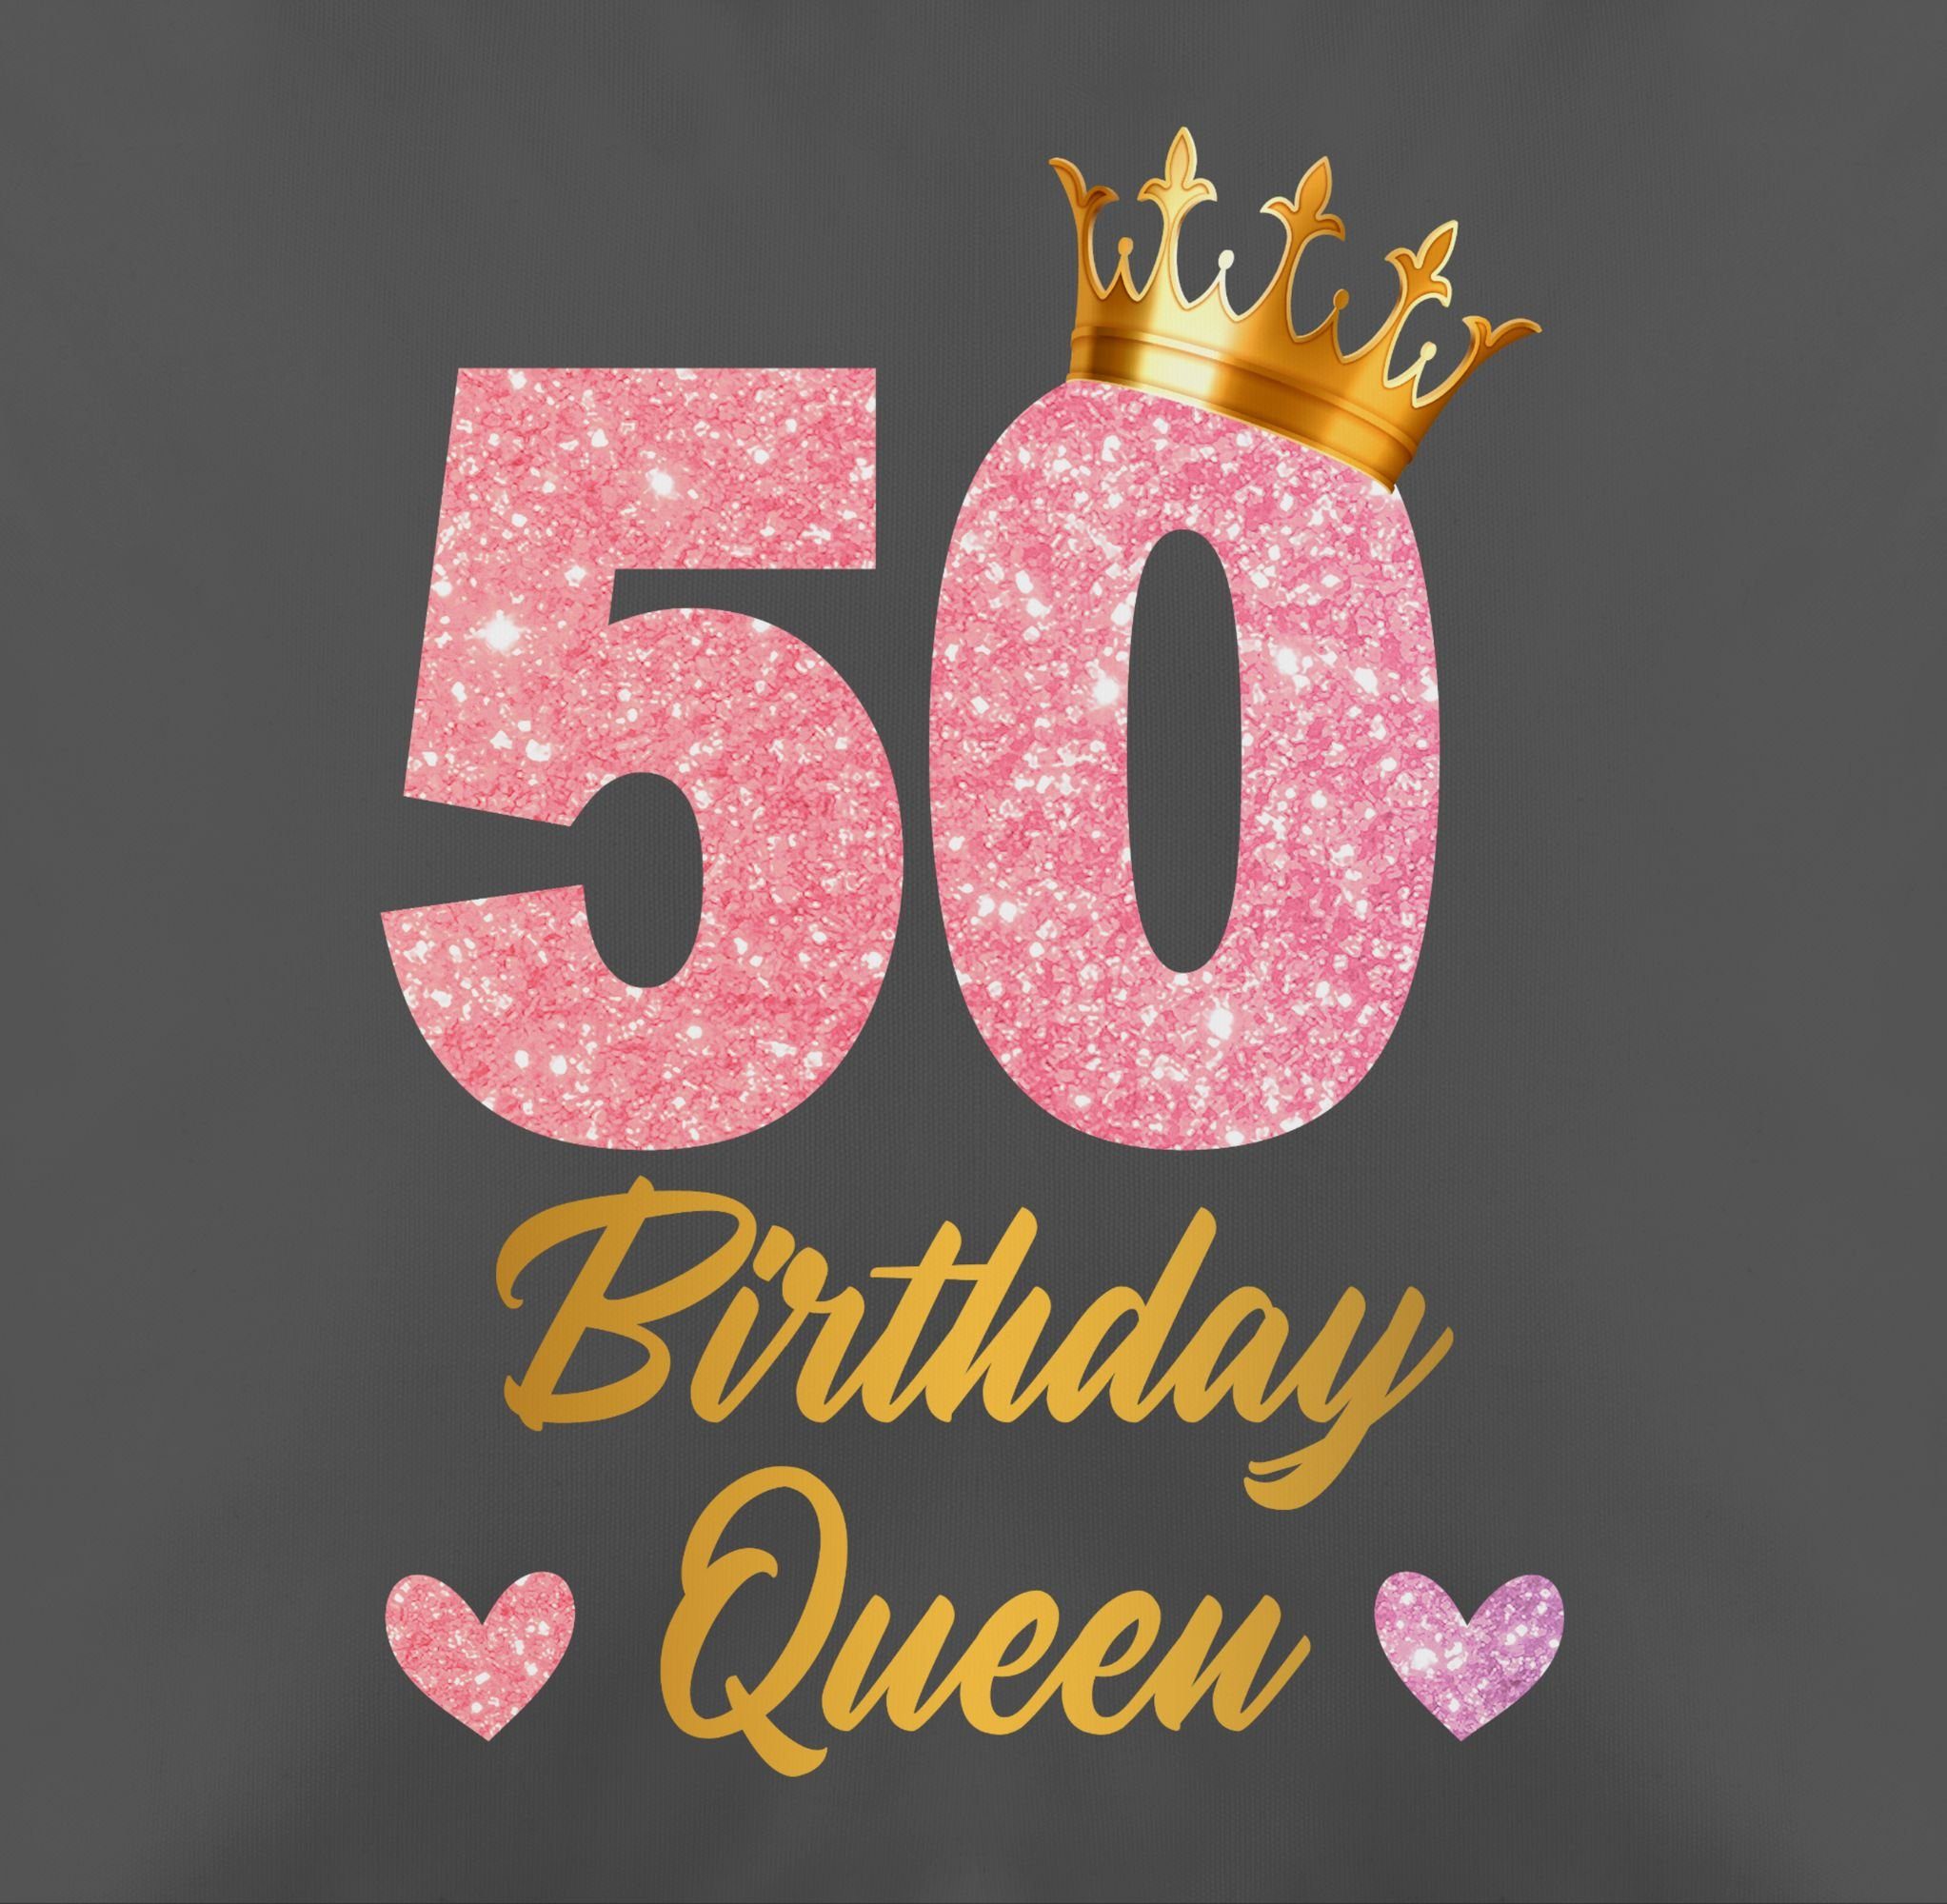 Dekokissen Kissen 50, Geburtstags Grau Geburtstag 50 Shirtracer Geburtstagsgeschenk Königin 2 Queen 50. Birthday